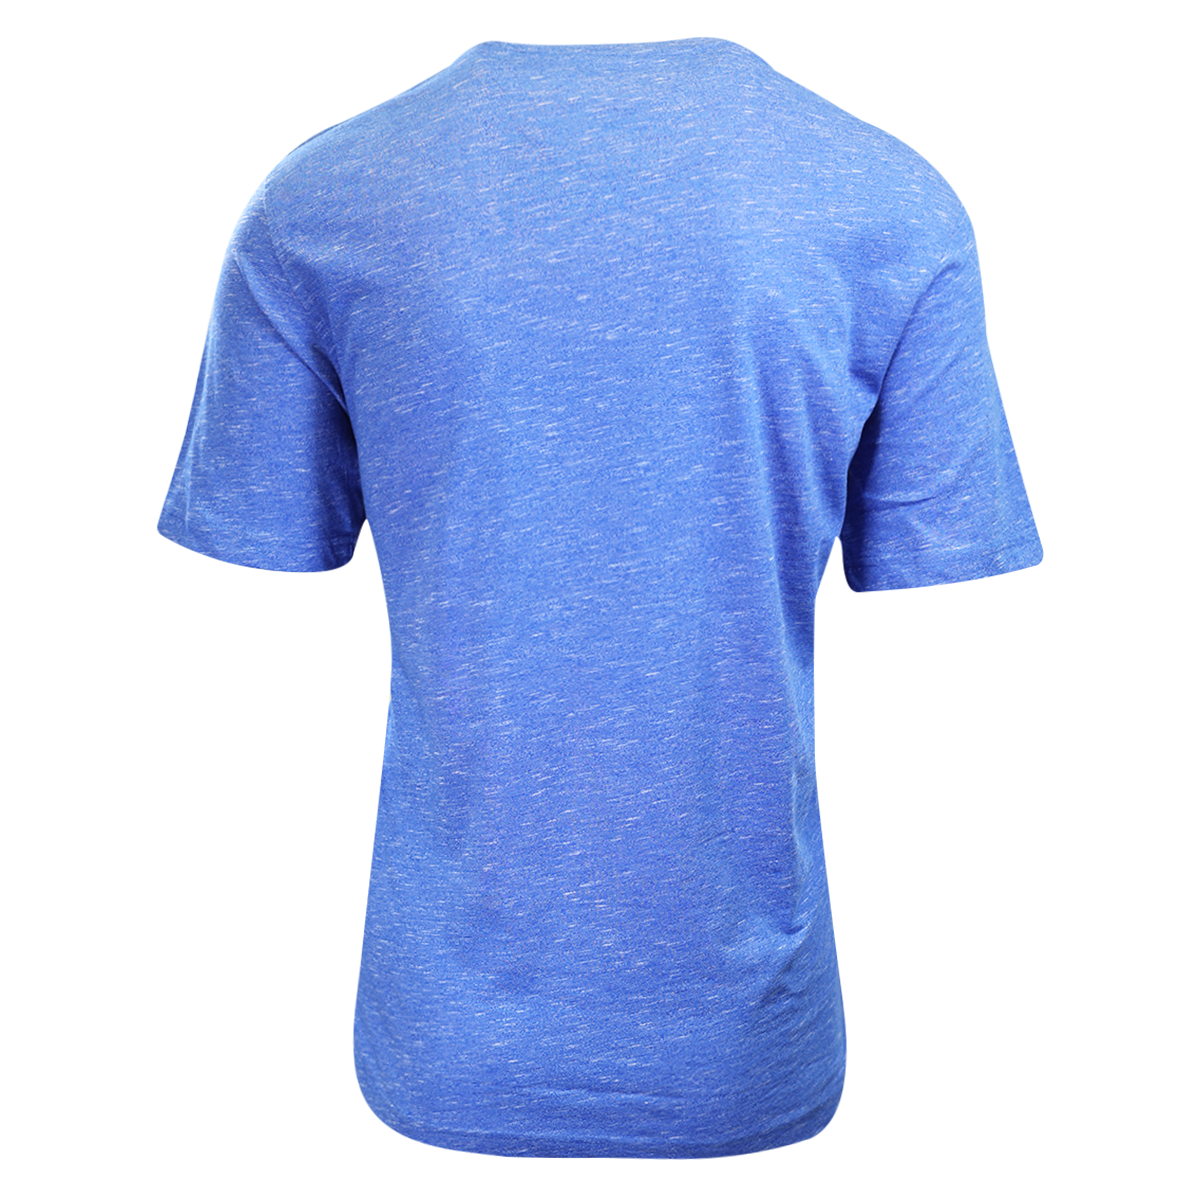 Greg Norman Men's Heather Sea Blue Big Logo S/S T-Shirt (S02)